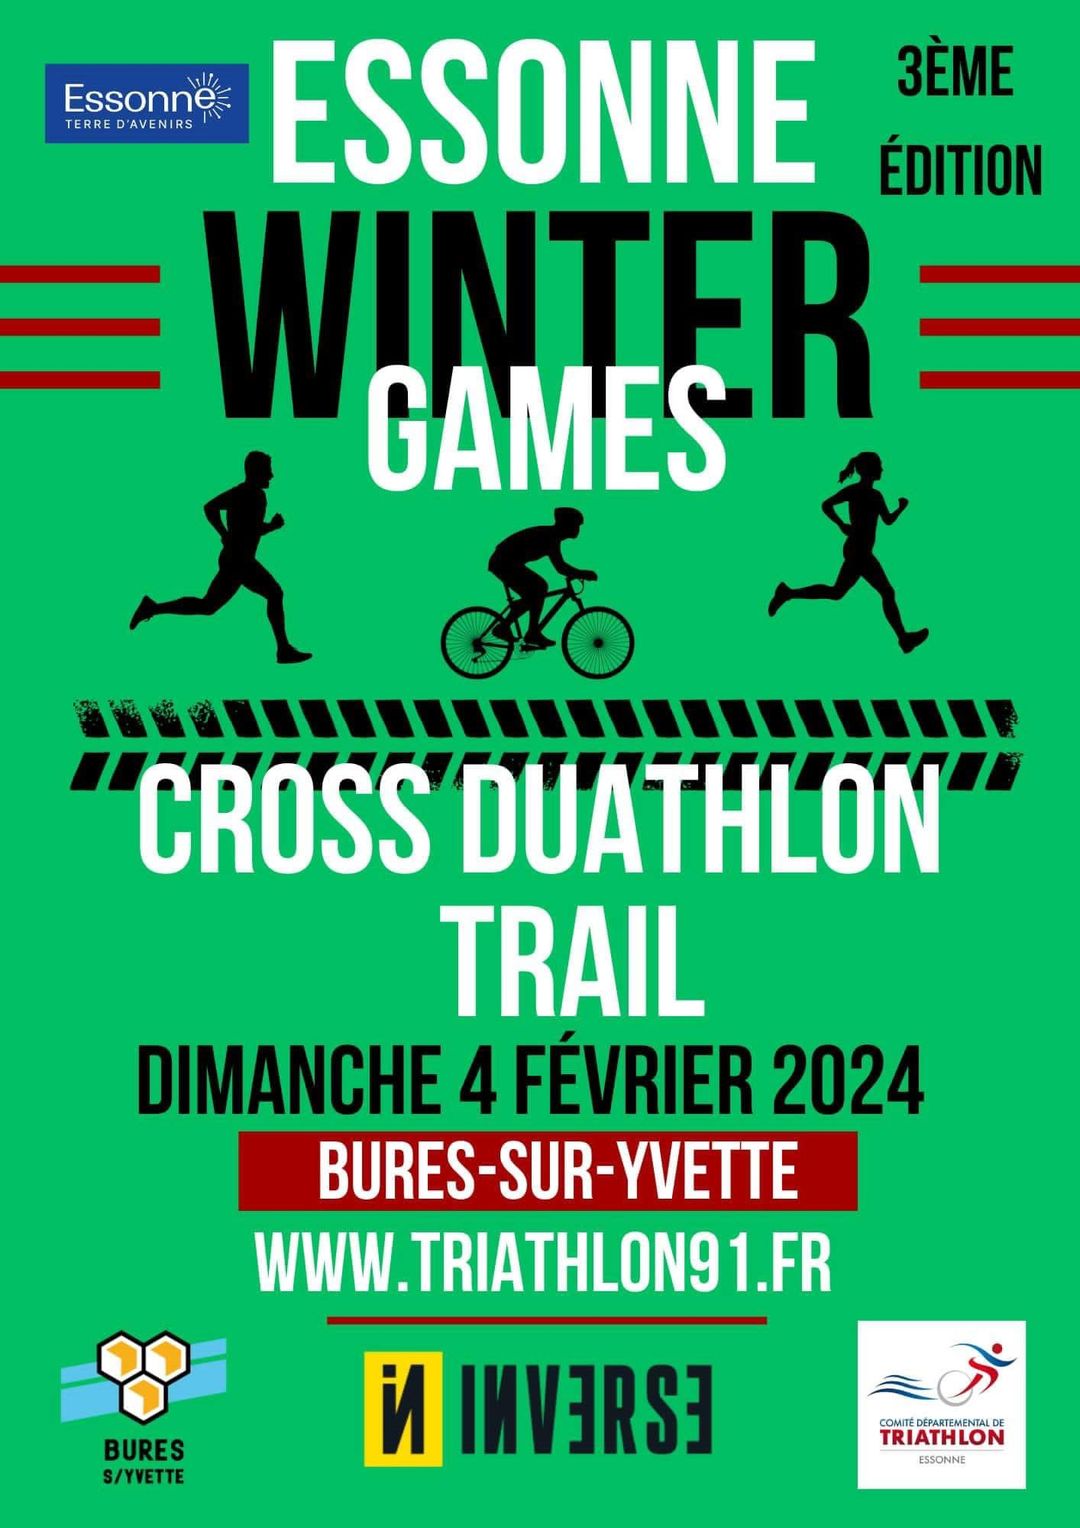 Essonne Winter Games